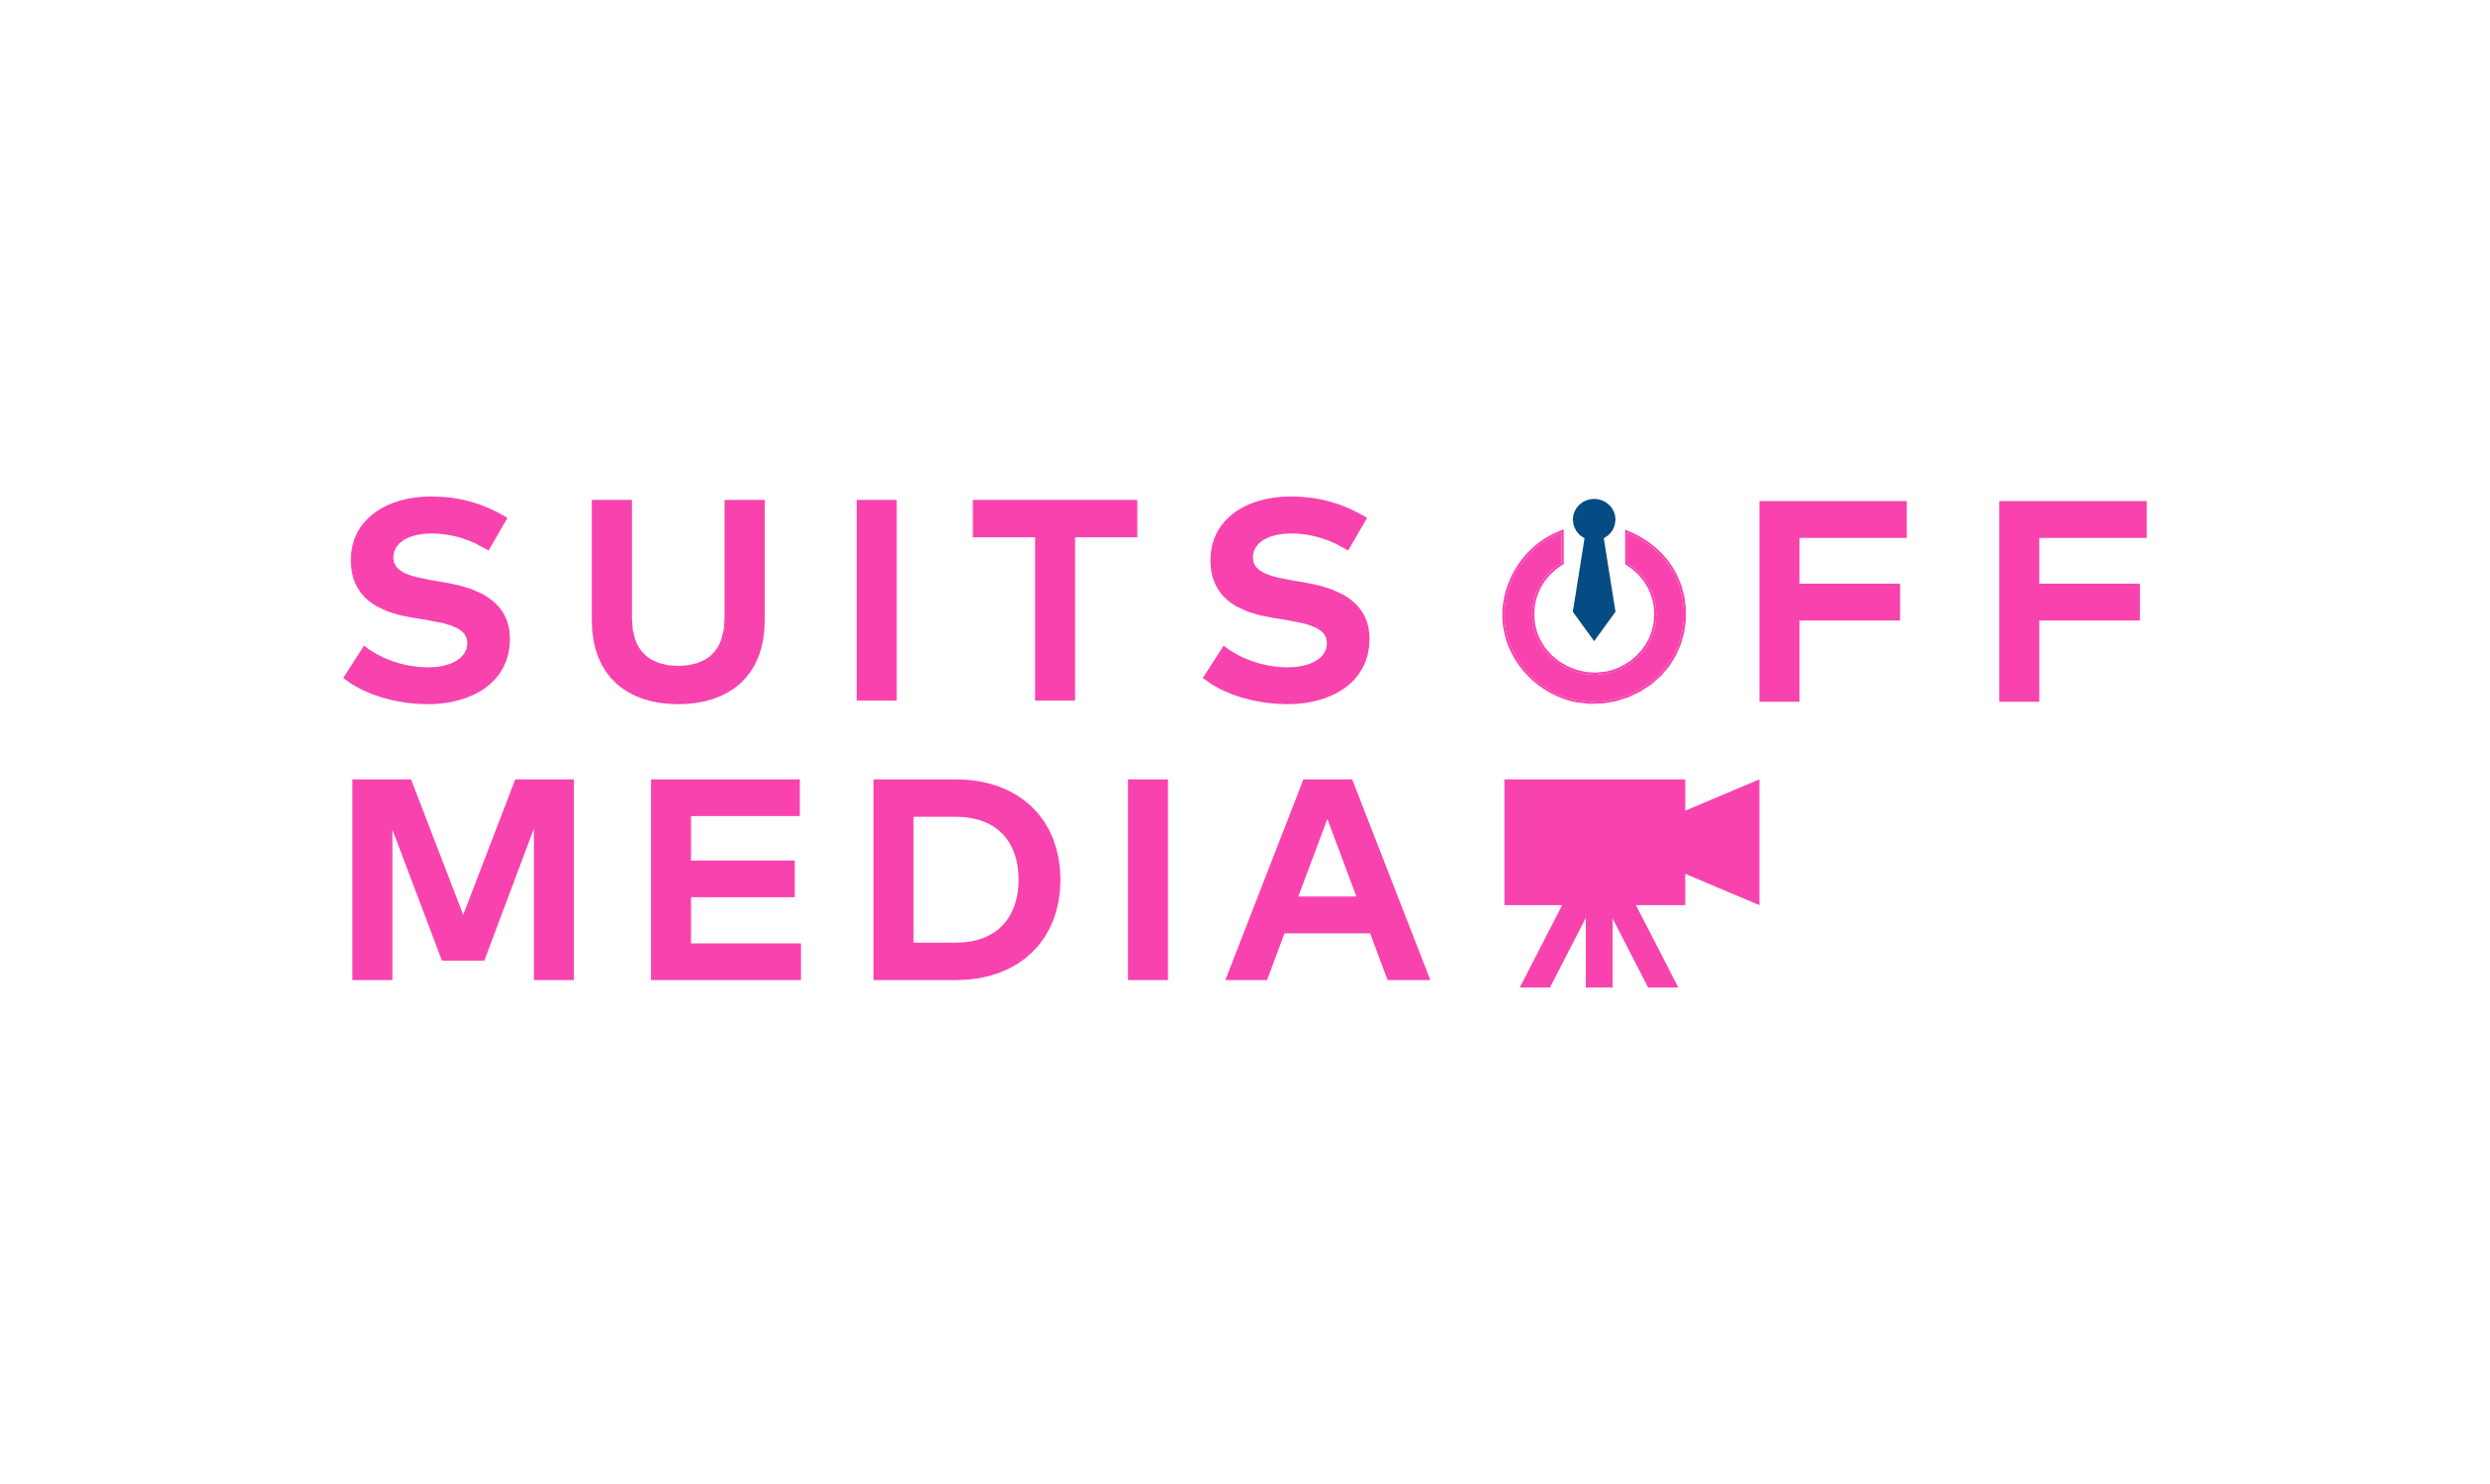 Suits Off Media